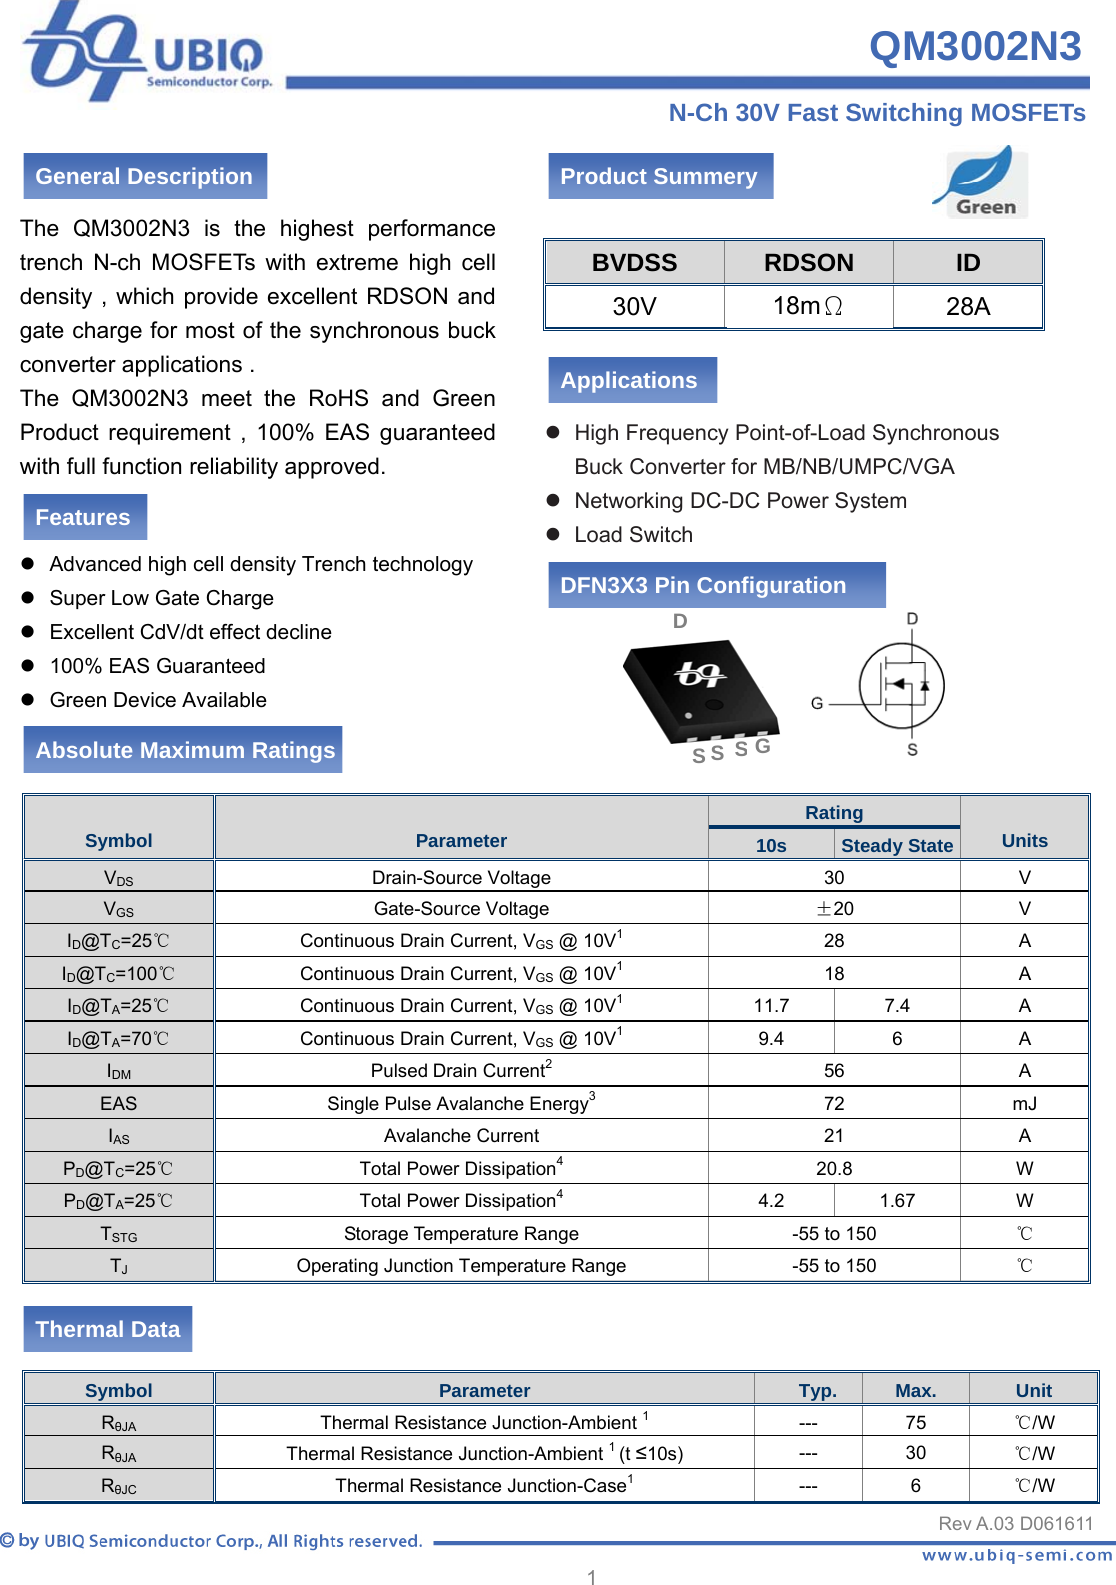 Page 1 of 5 - QM3002N3 - Datasheet. Www.s-manuals.com. Ra.03 Ubiq